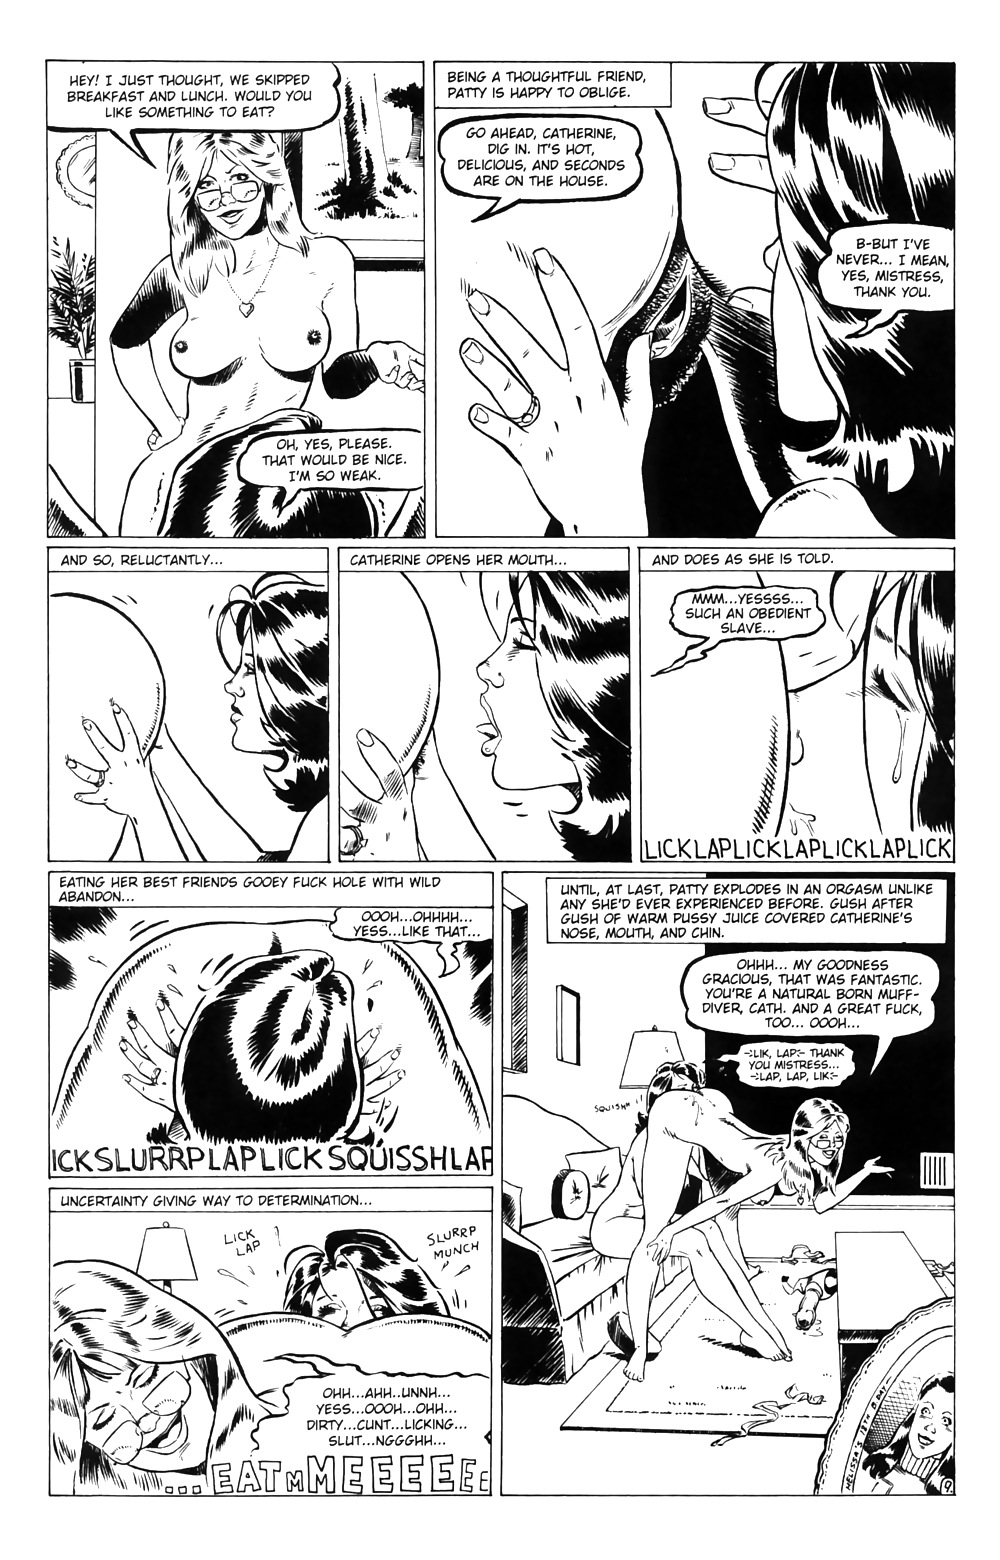 Casalinghe in gioco #01 - eros comics by rebecca - aprile 2002
 #36196513